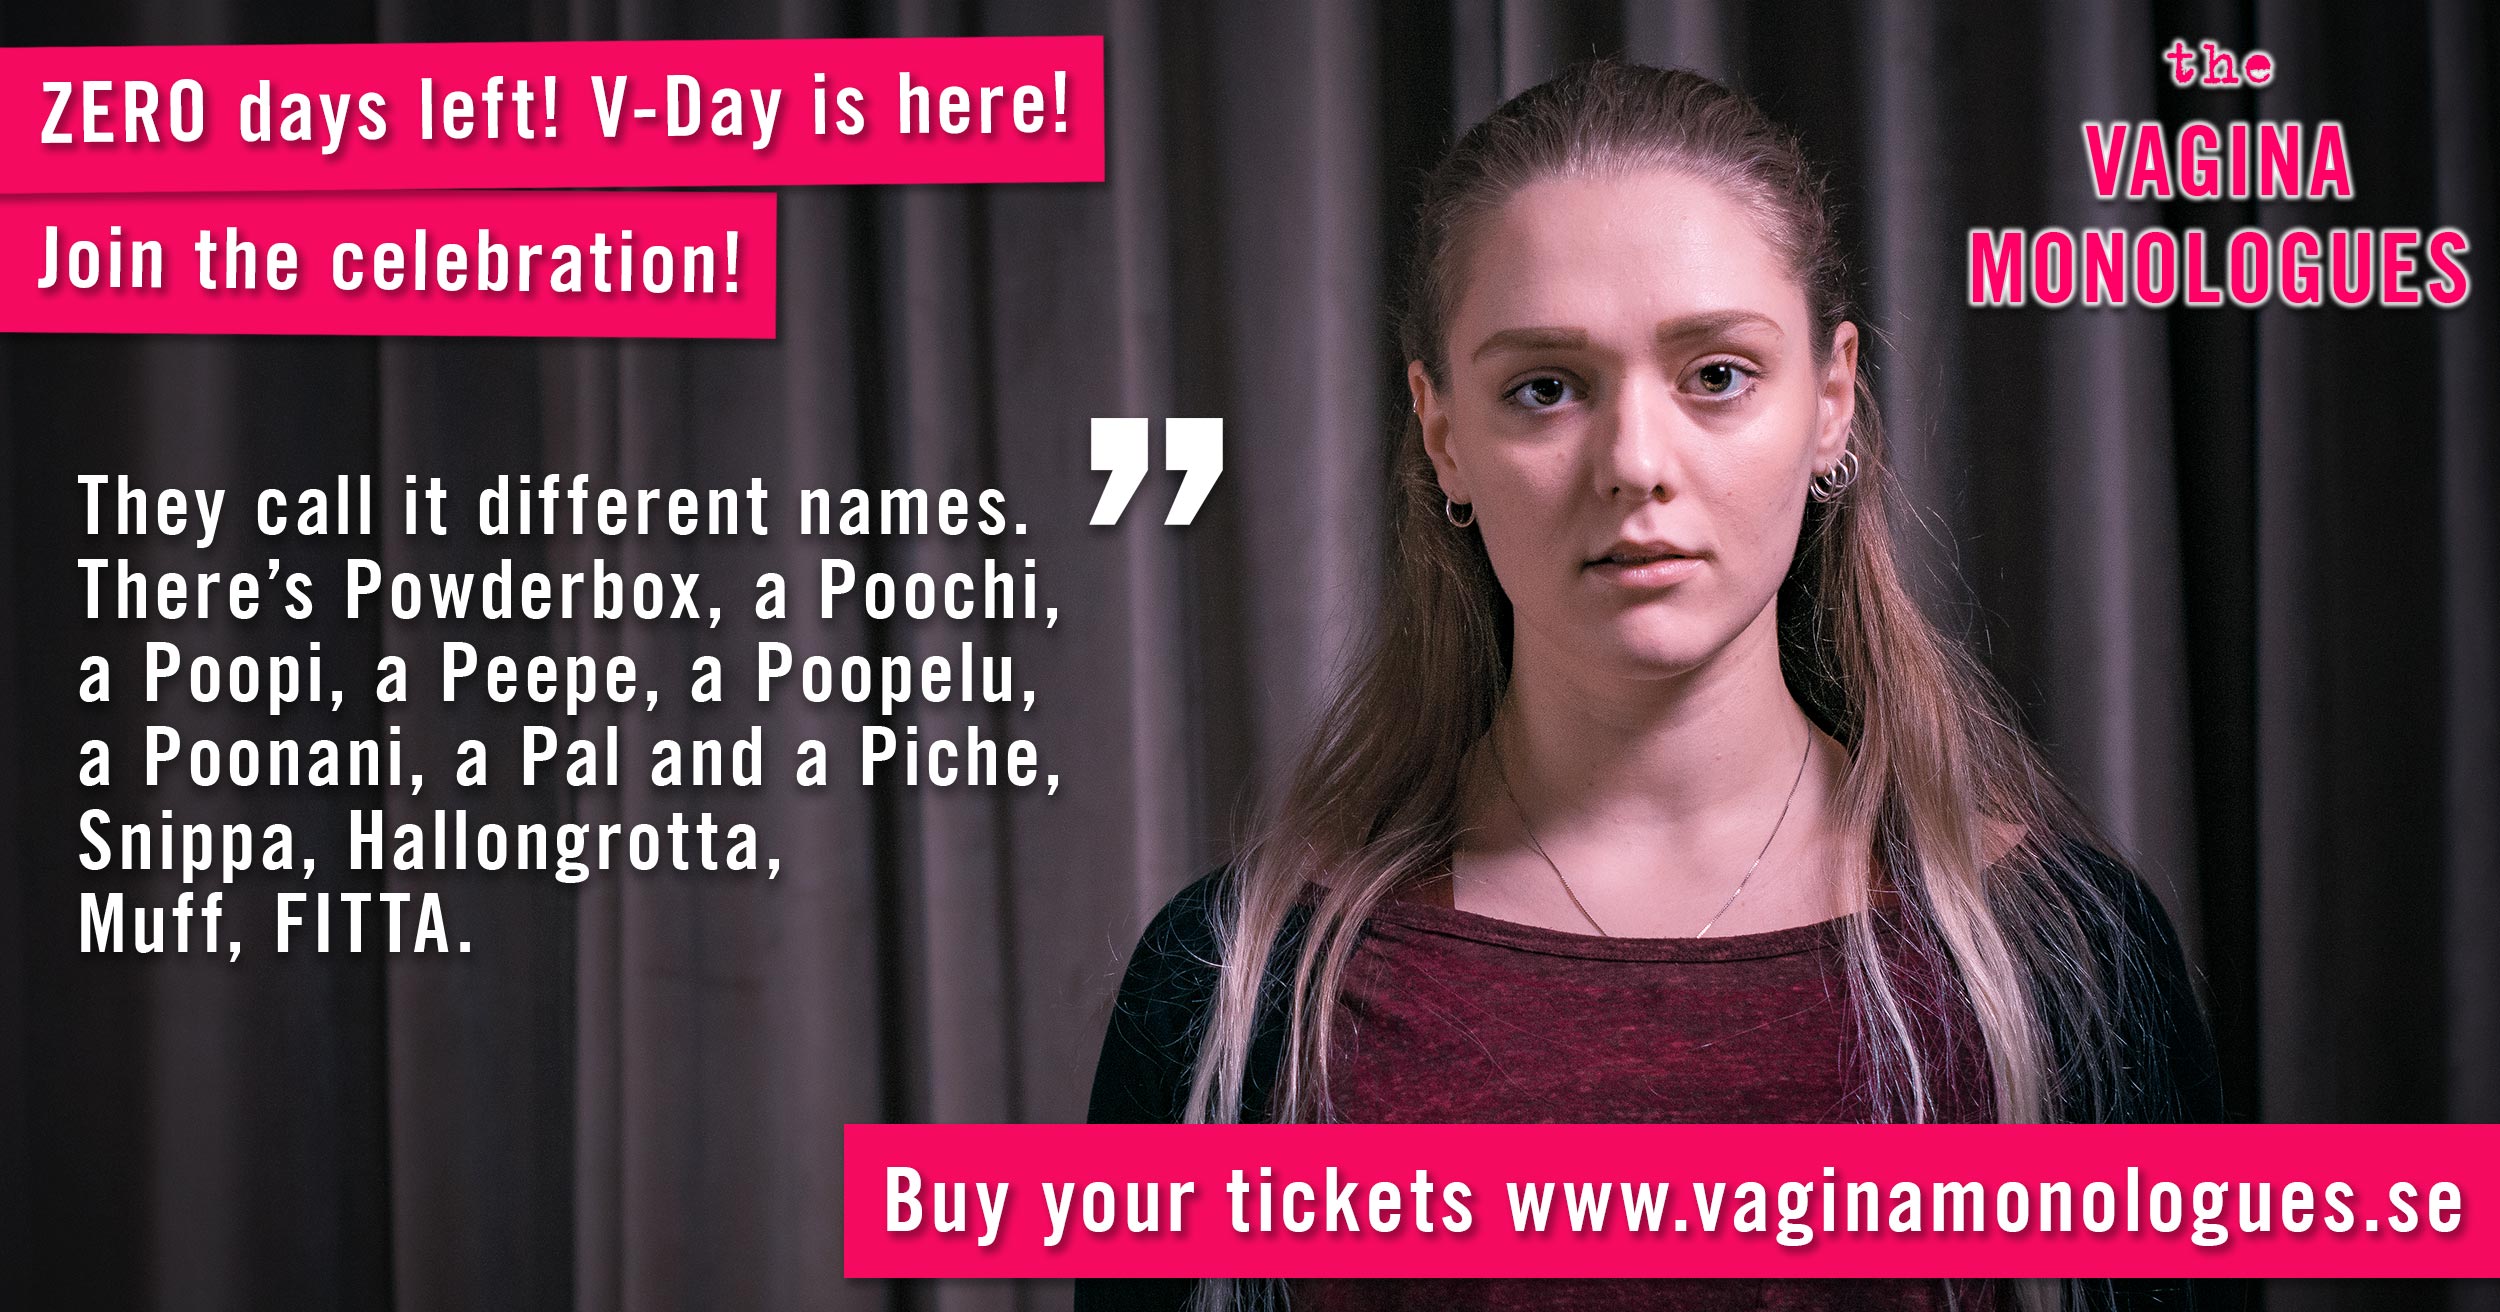 Sara is performing at The Vagina Monologues on 6th March 2020. Buy tickets at vaginamonologues.se!